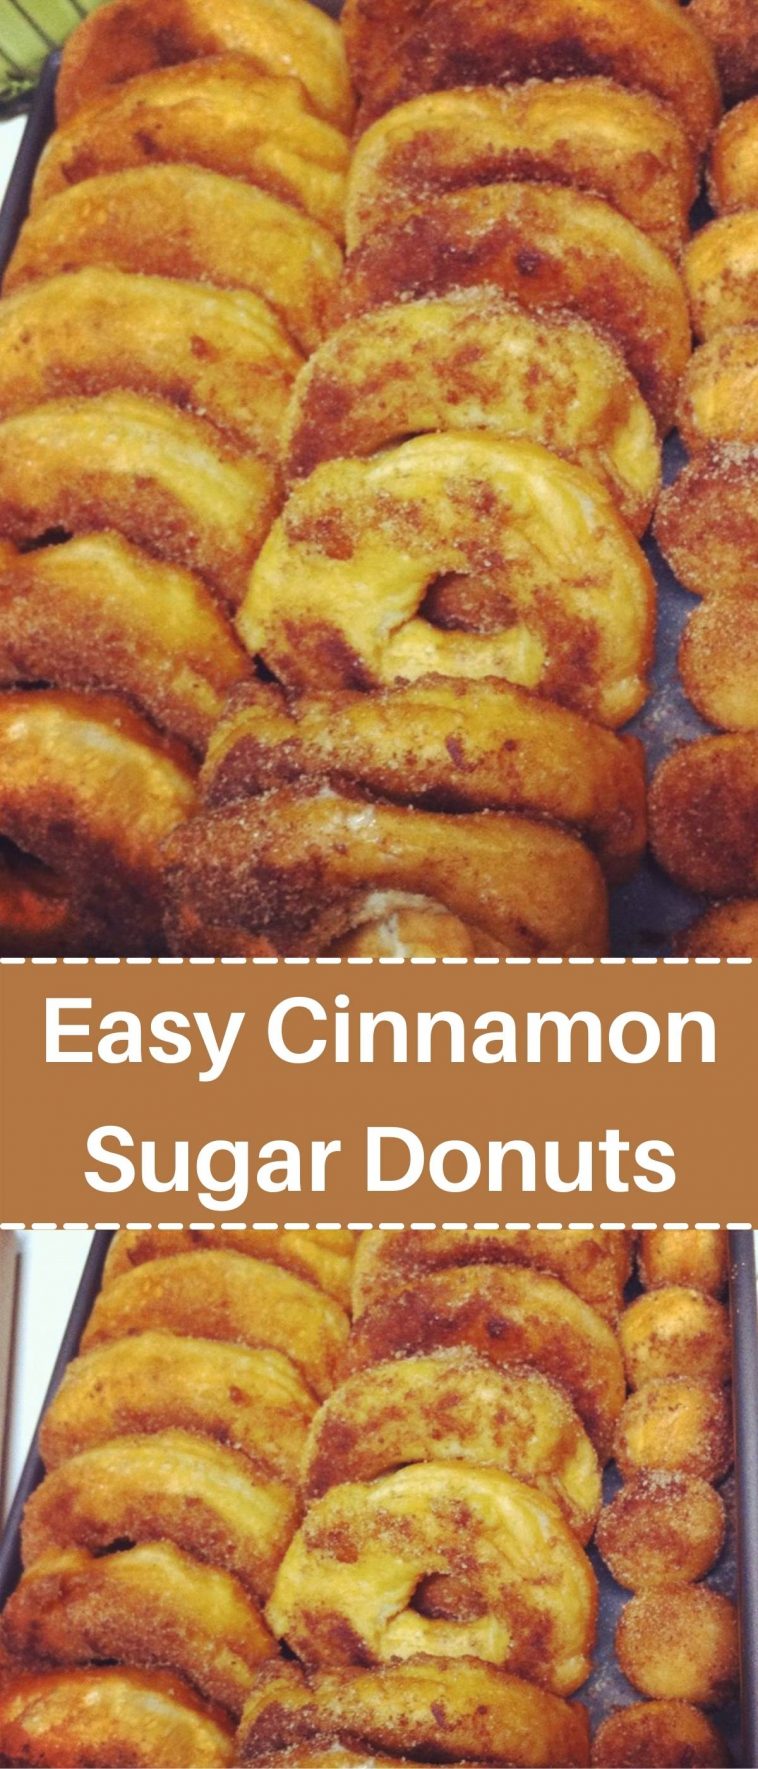 Easy Cinnamon Sugar Donuts